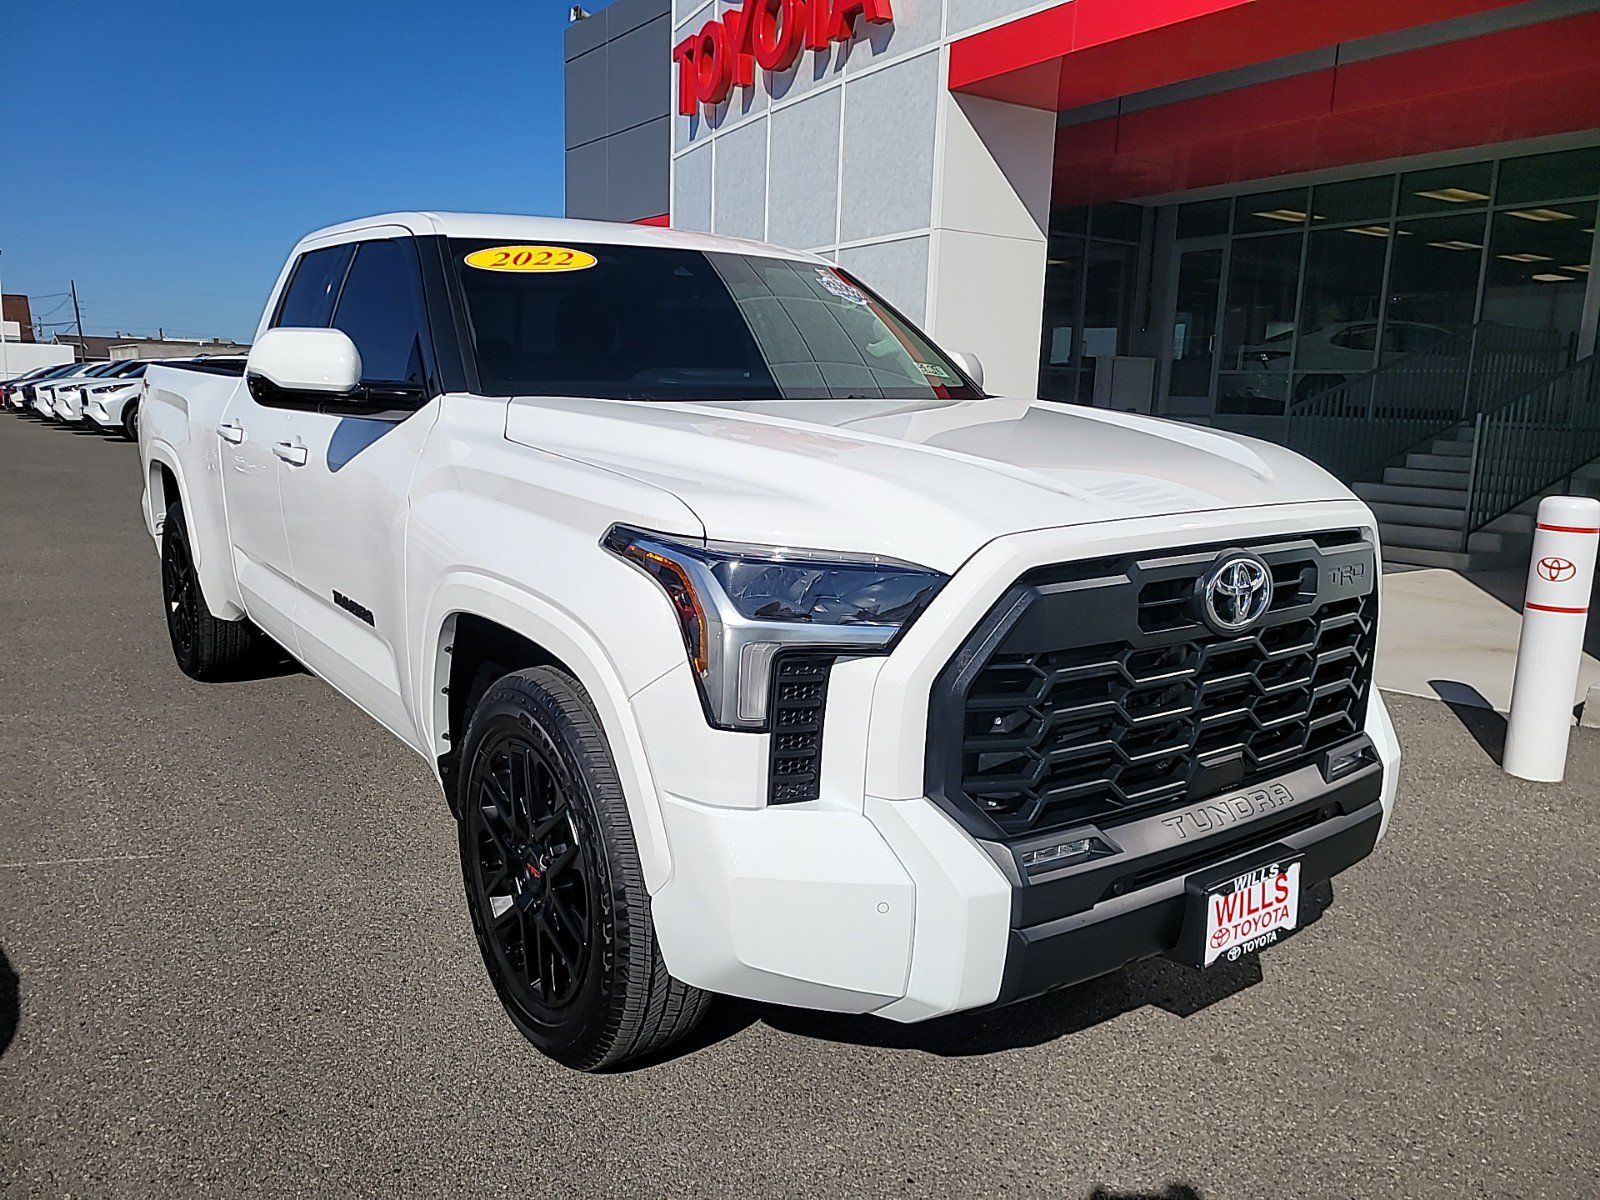 2022 - Toyota - Tundra 2WD - $41,999